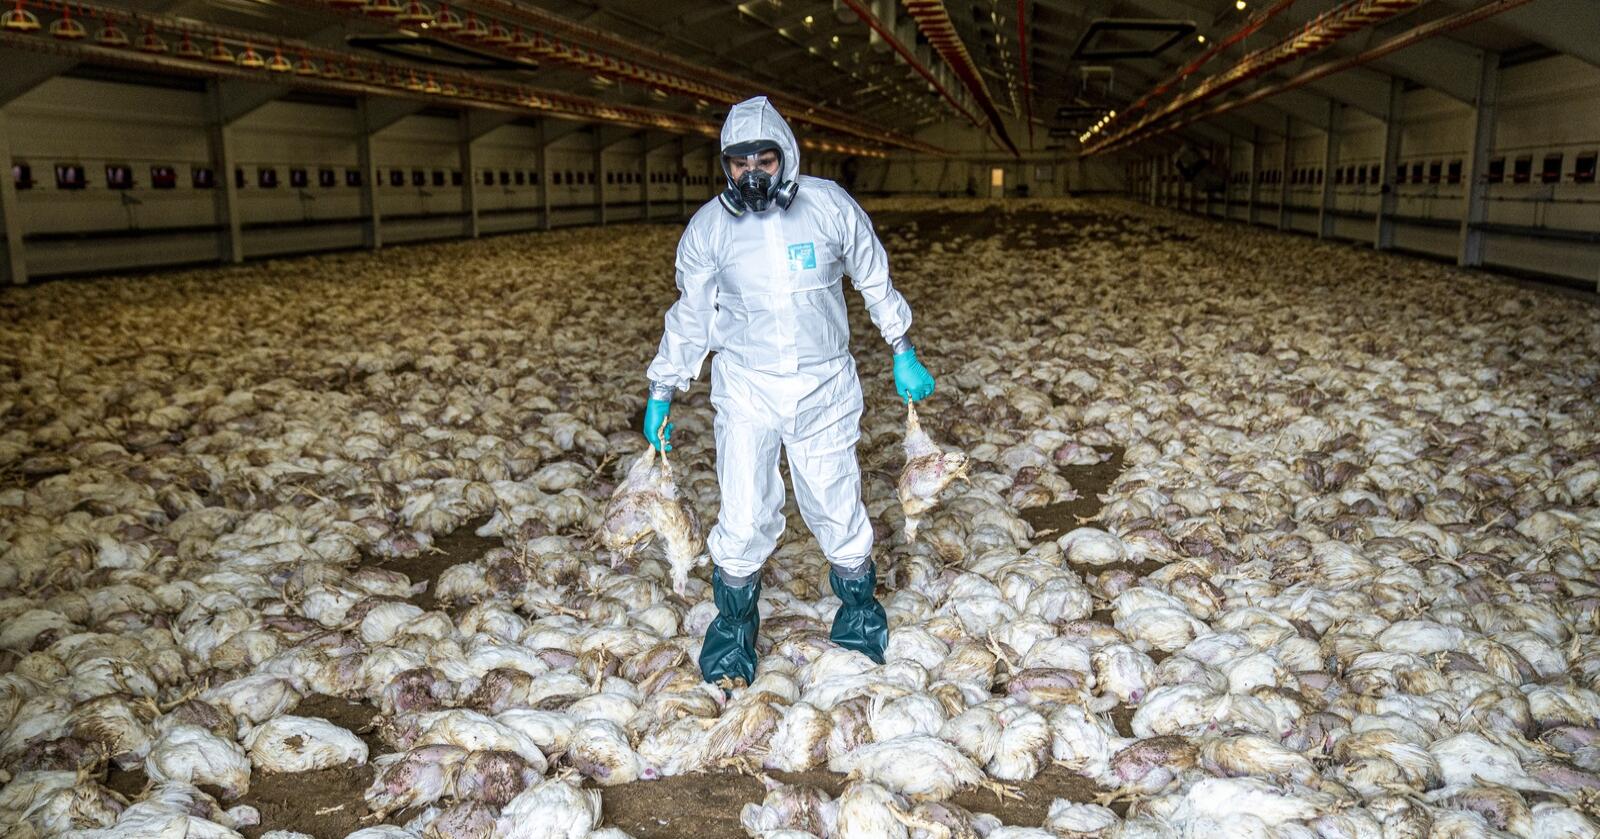 Nylig ble fugleinfluensa for første gang påvist i en kommersiell fjørfebesetning i Norge, og Ove Byberg ble pålagt å gasse og destruere besetningen på 35.000 kyllinger. Foto: Jarle Aasland/Stavanger Aftenblad.